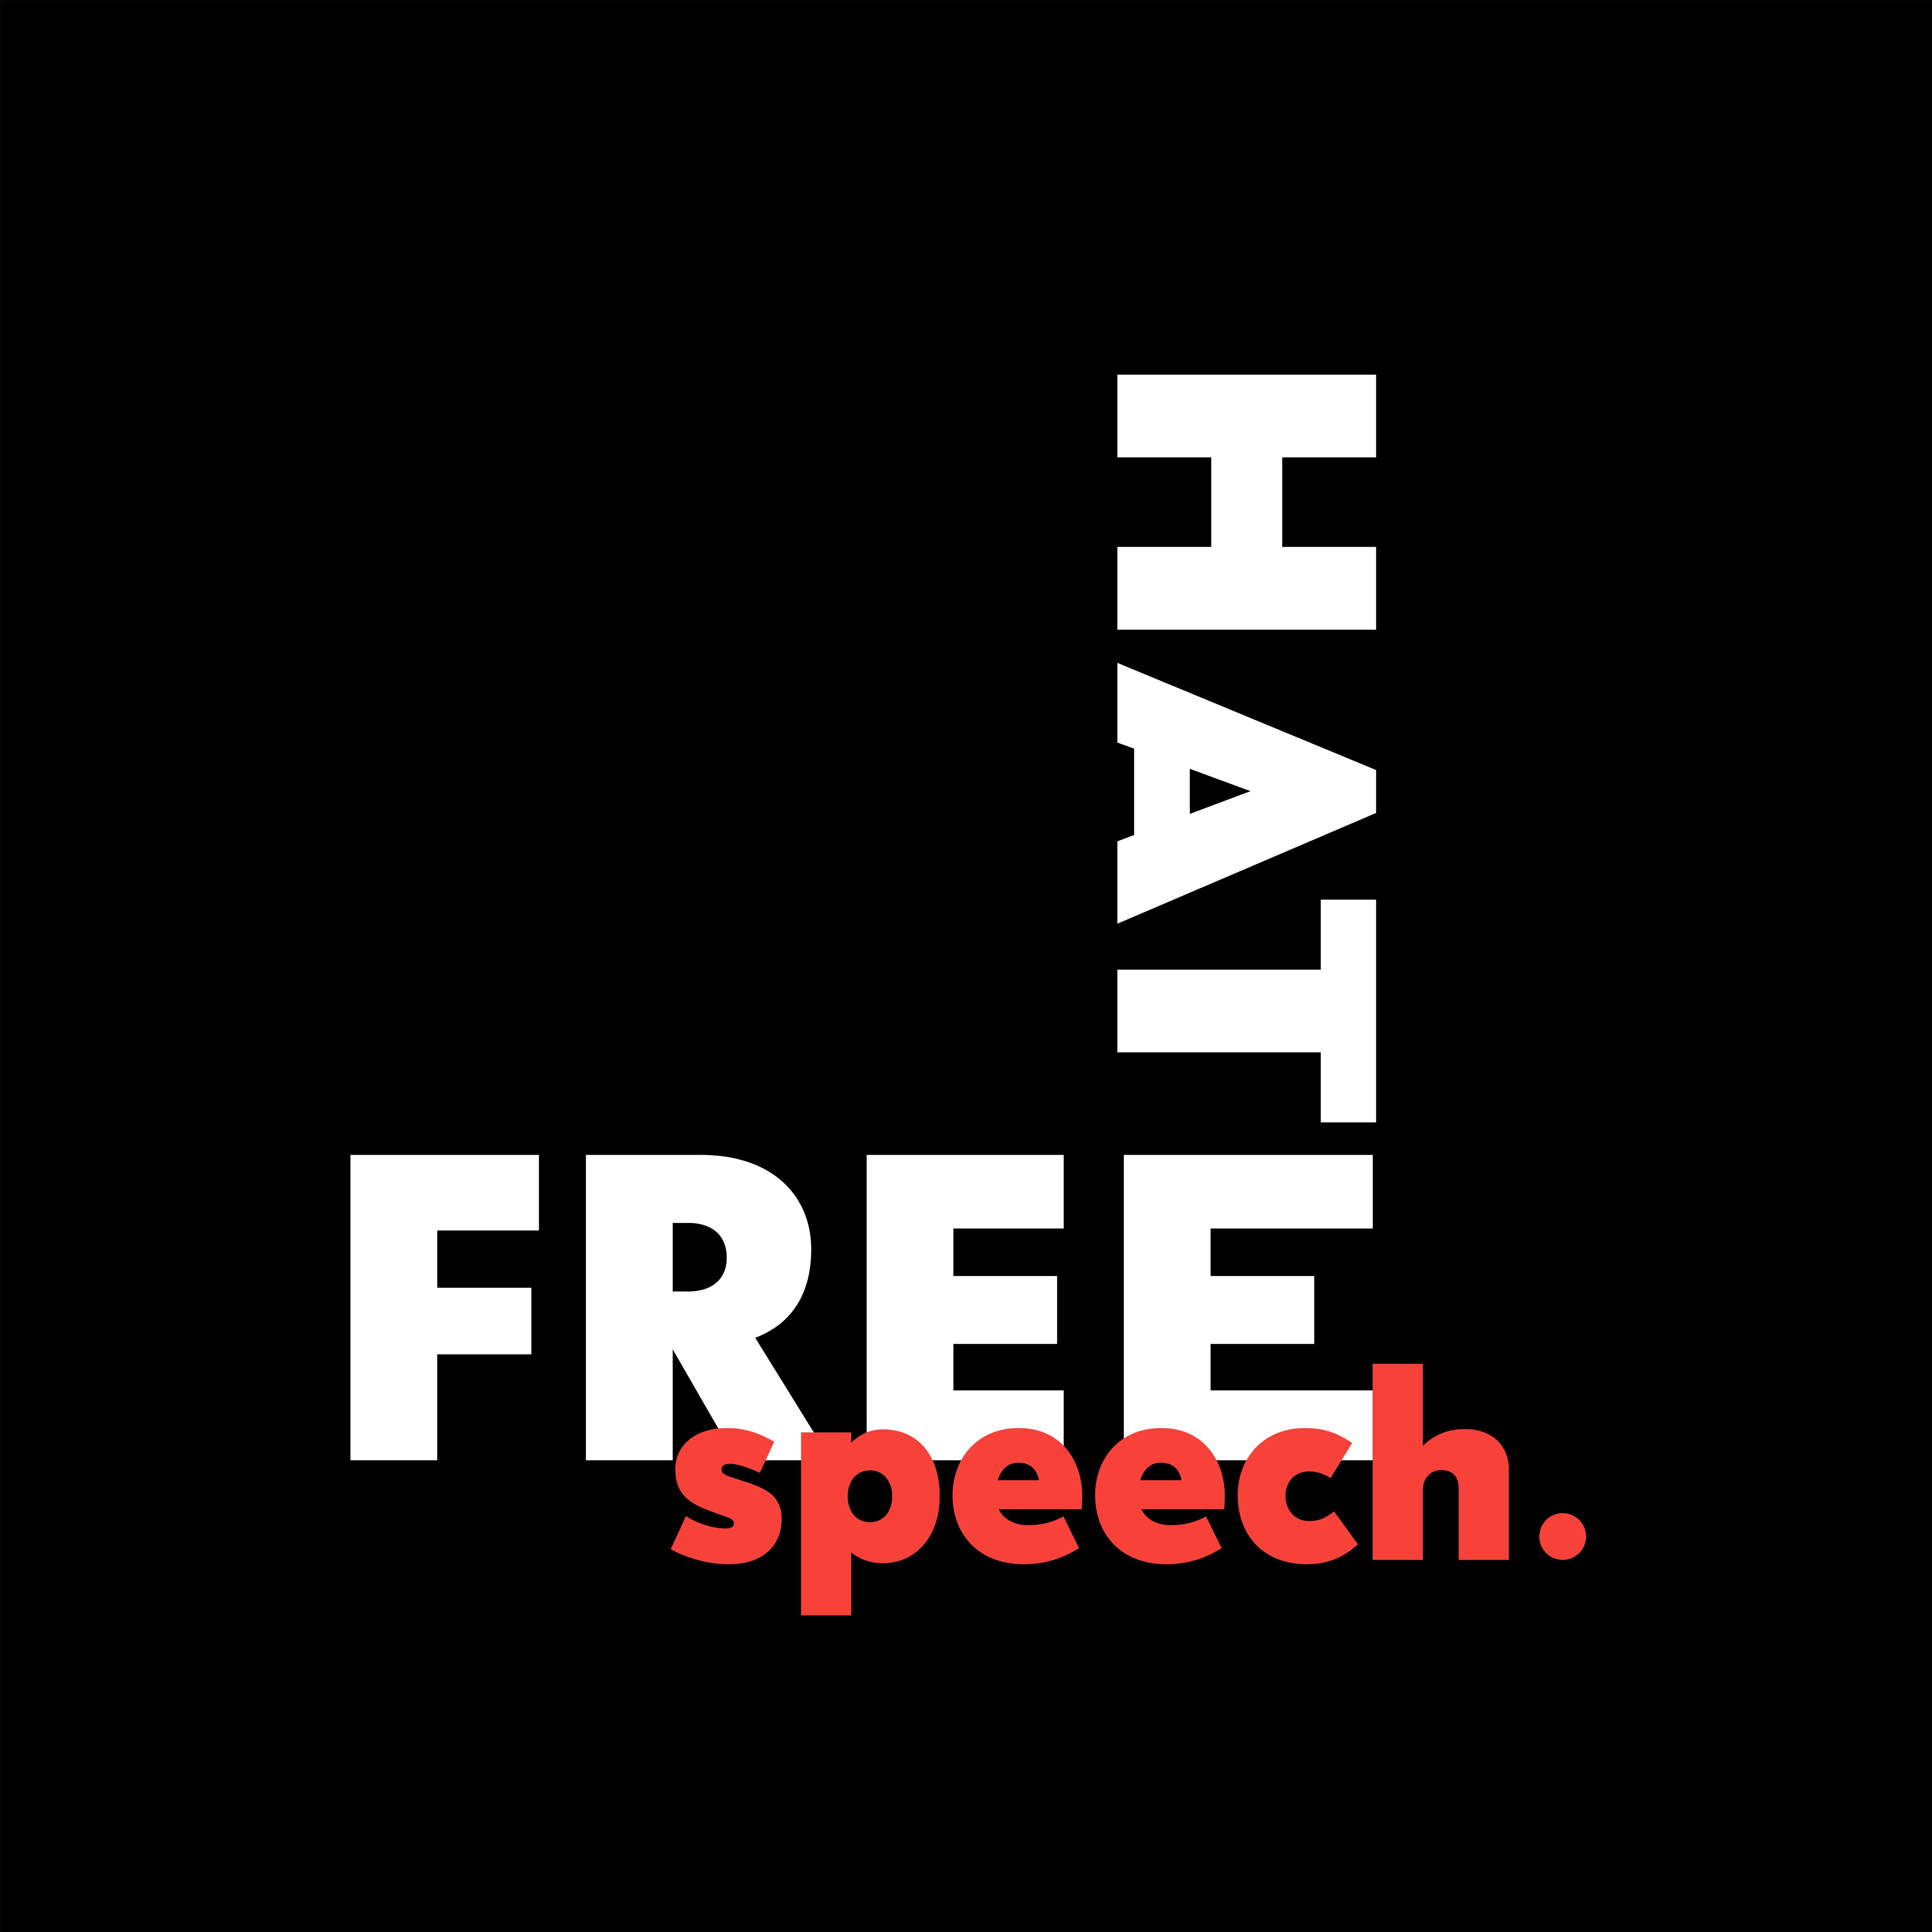 Free Speech, Political Speech, and Hate Speech on Campus